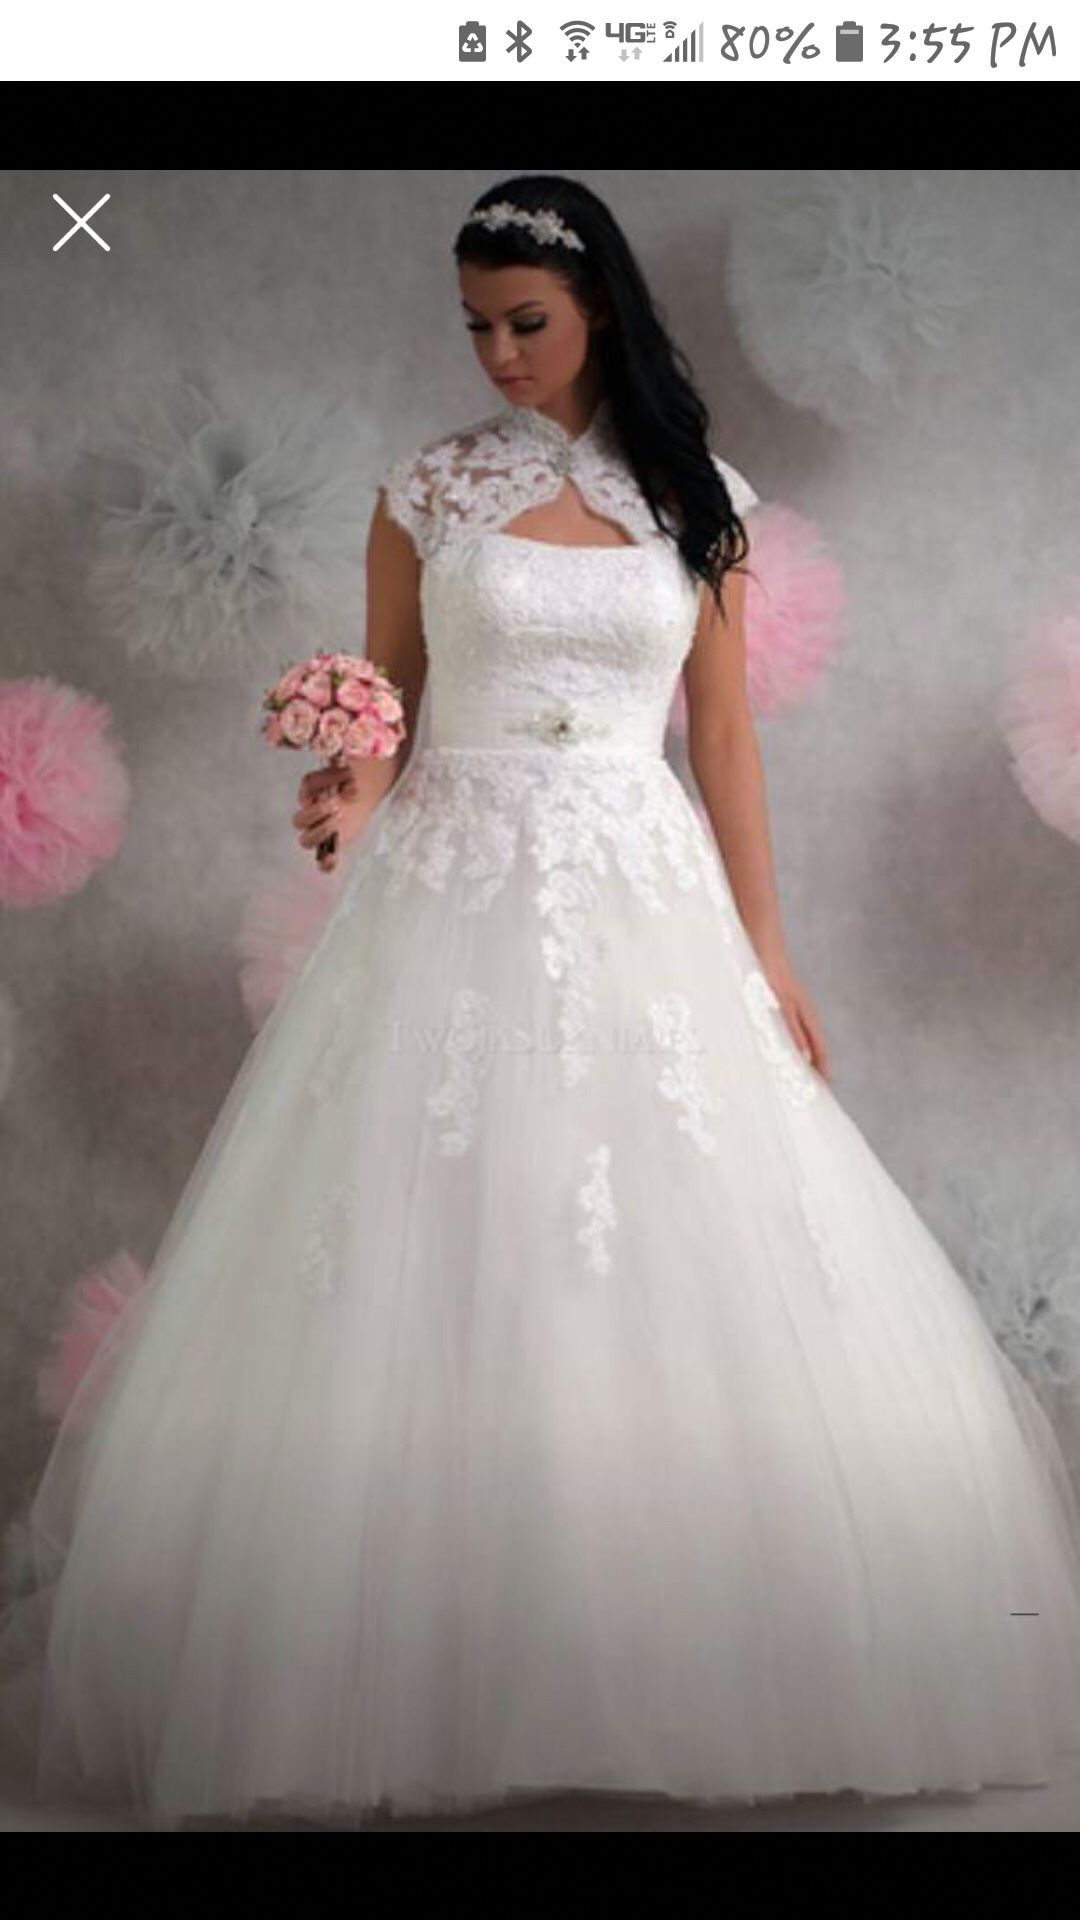 Venus Ivory Bridal Wedding dress, size 22. Never been worn, never altered. $800.00